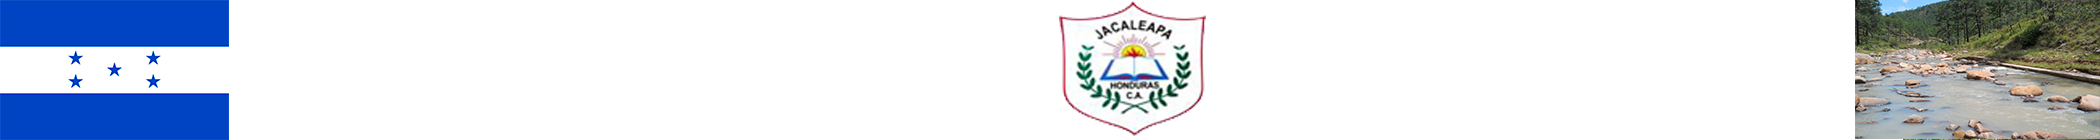 Banner Jacaleapa